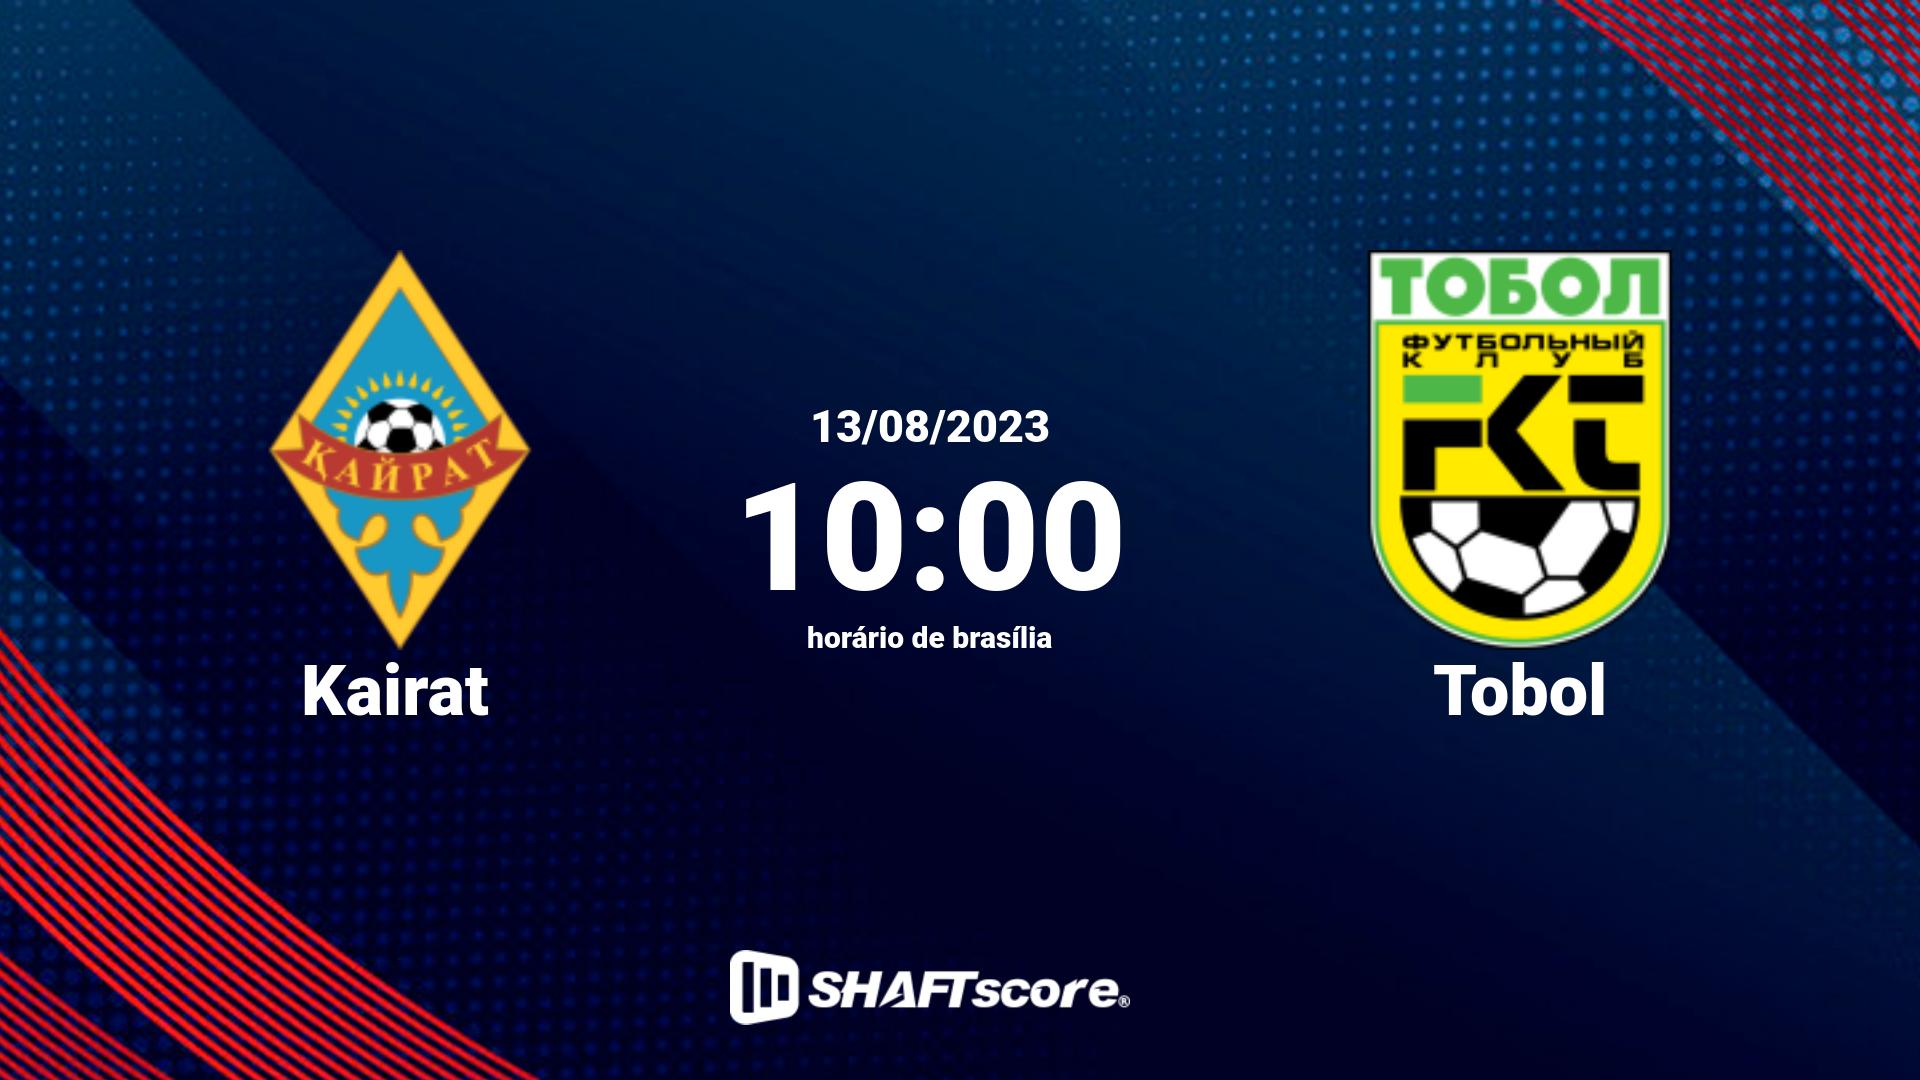 Estatísticas do jogo Kairat vs Tobol 13.08 10:00